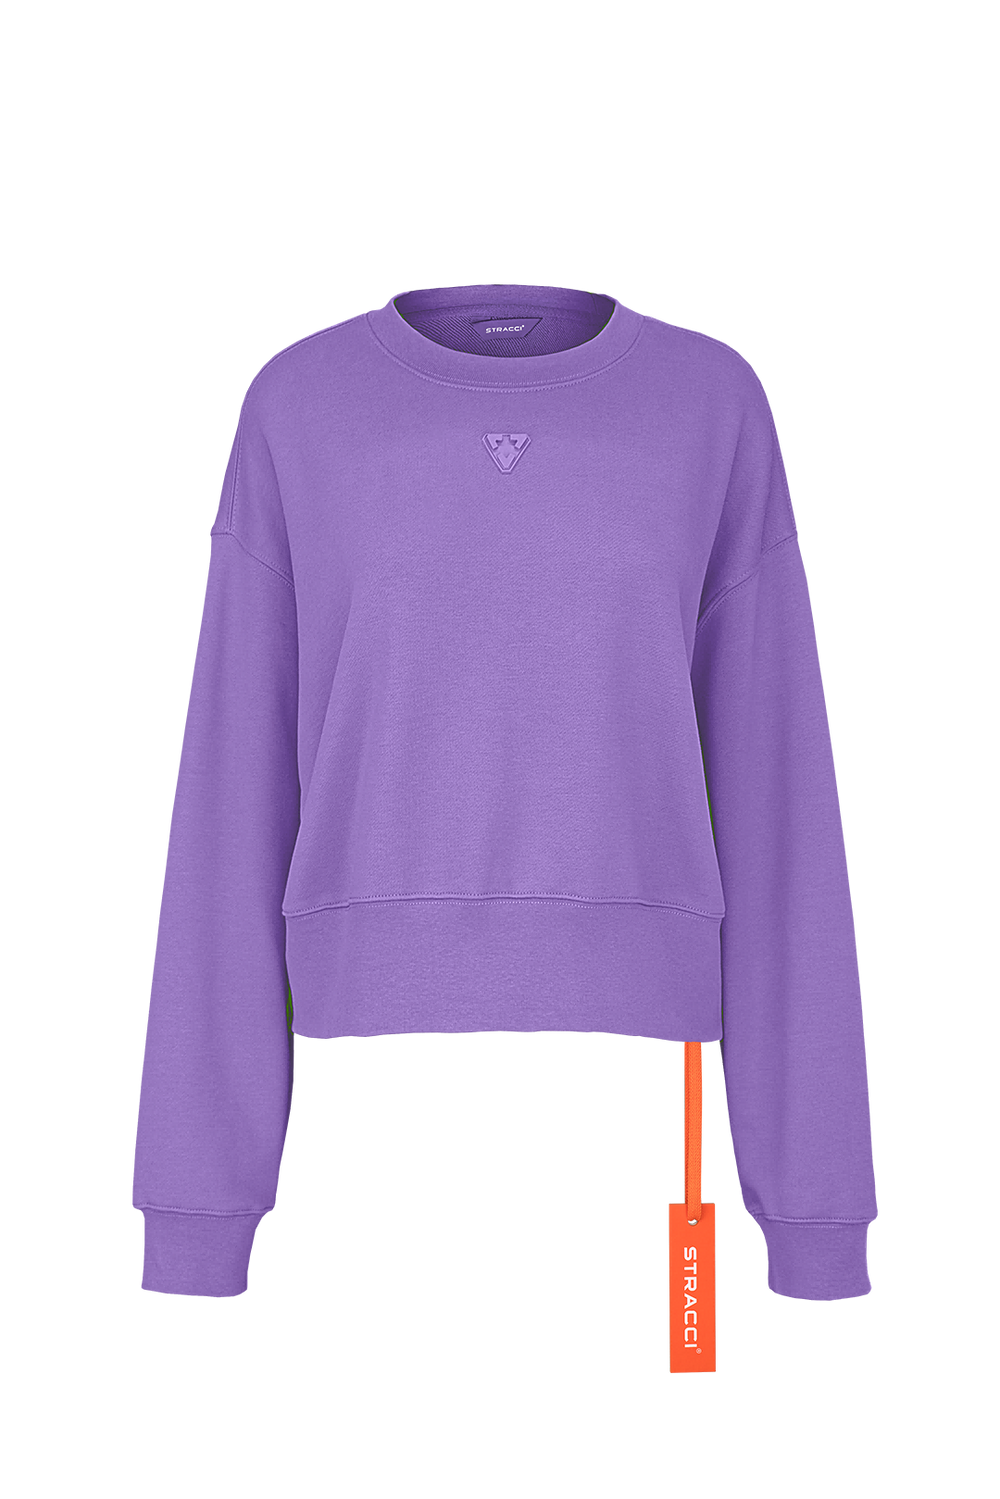 15# Arrows Women's Cropped Round Neck Sweatshirt